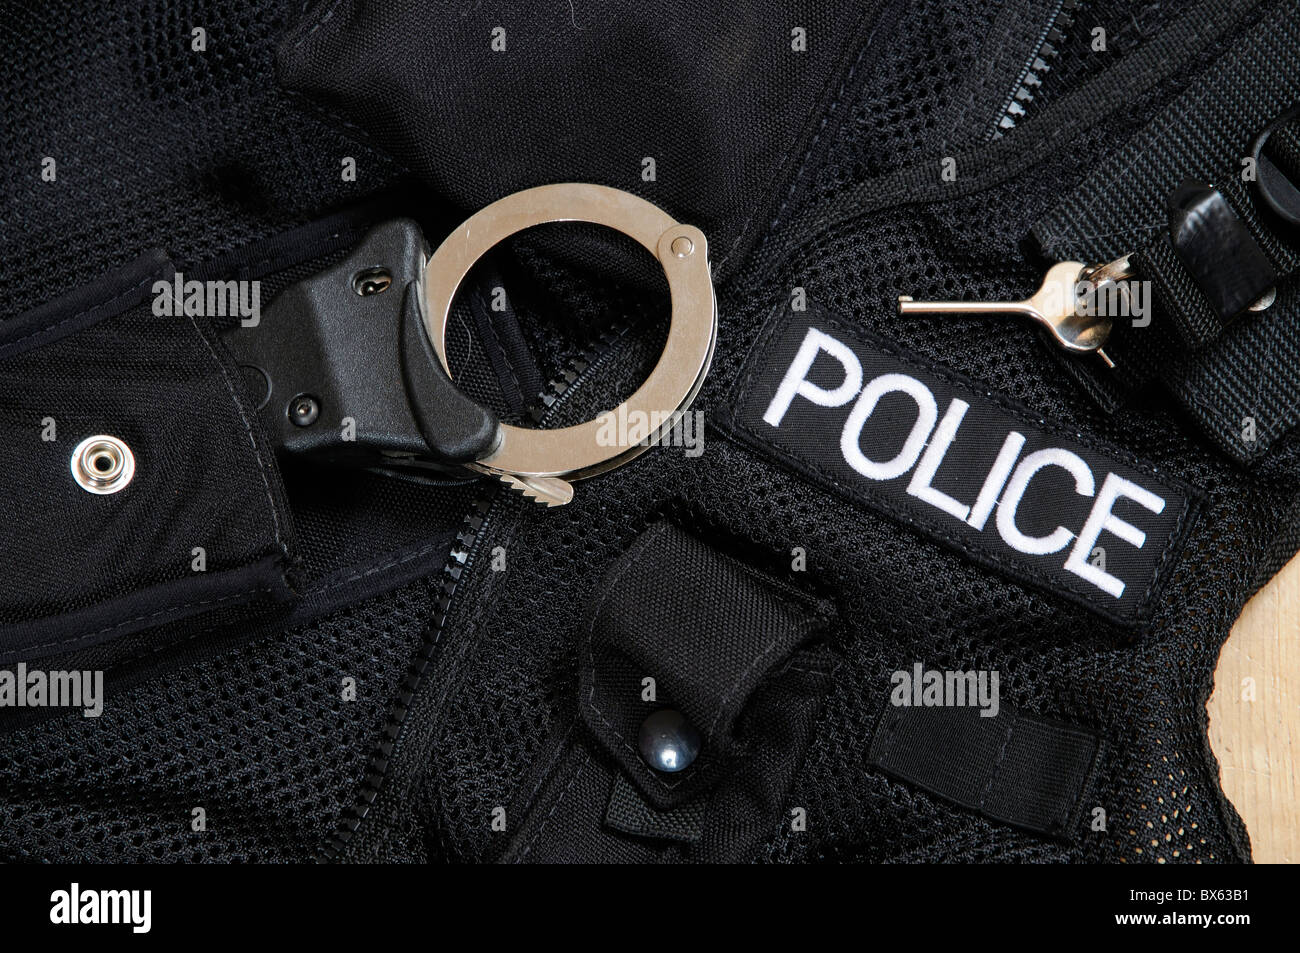 Police handcuffs and unlocking key Stock Photo